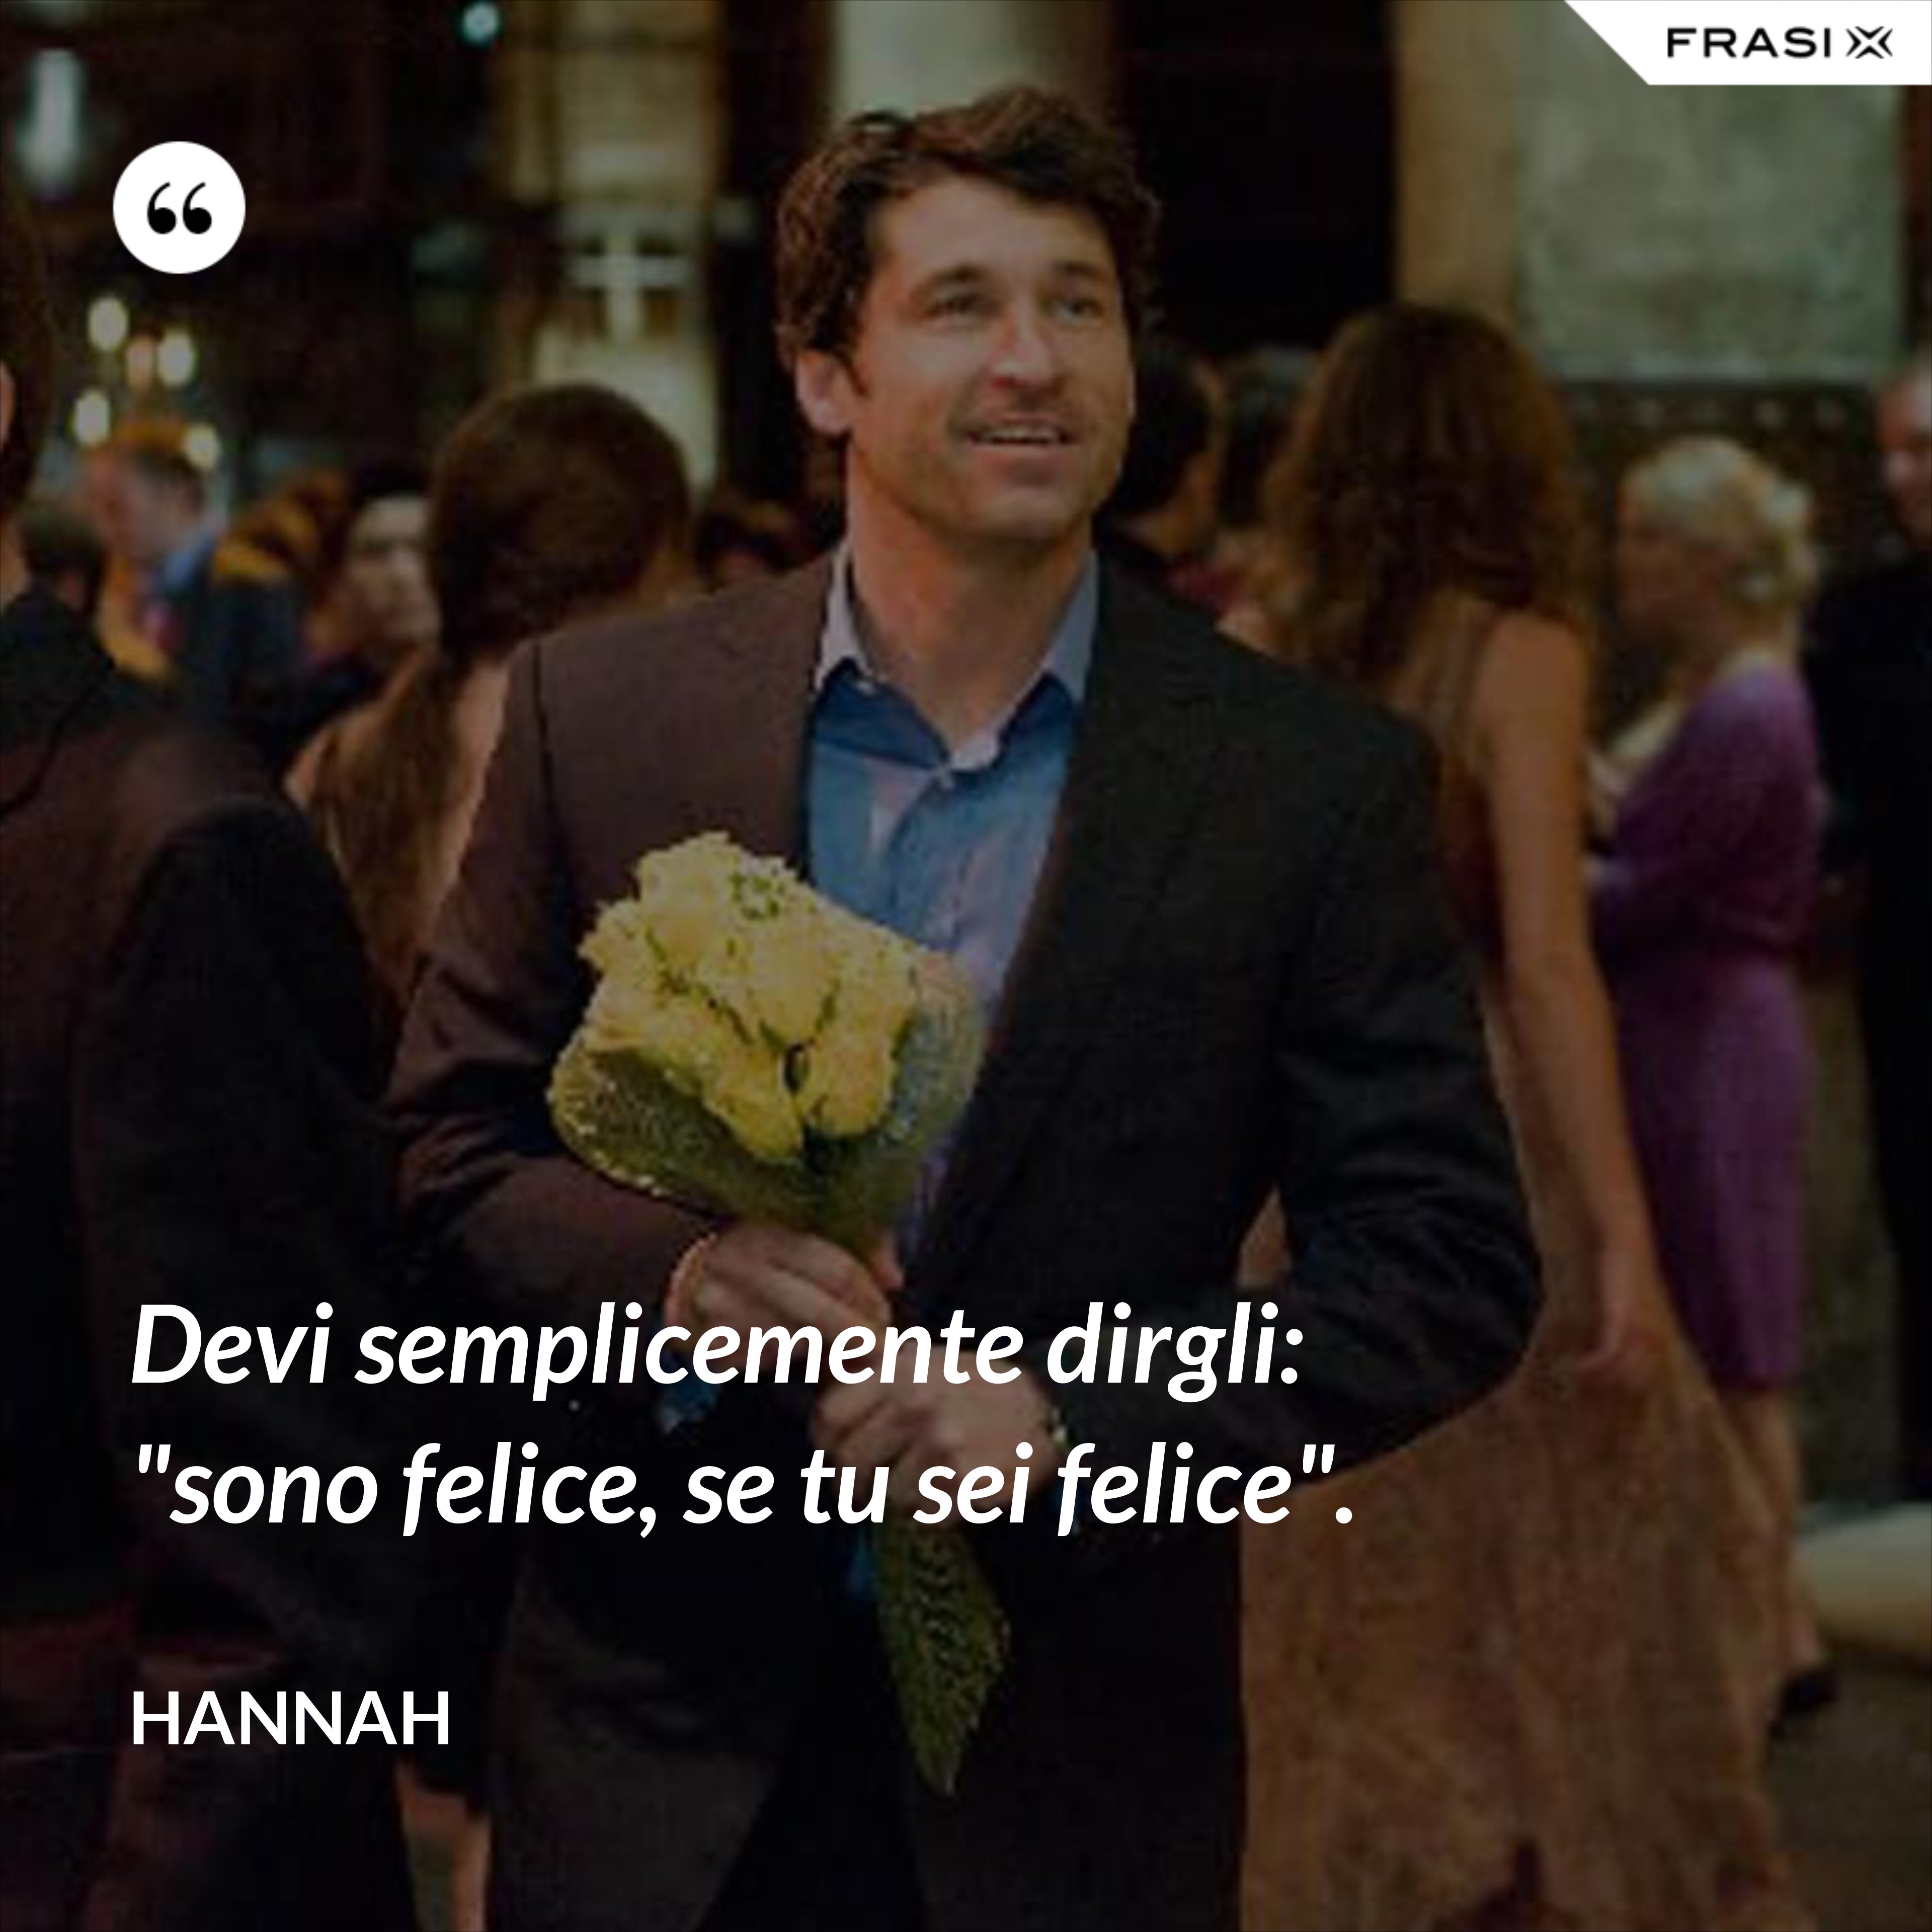 Devi semplicemente dirgli: "sono felice, se tu sei felice". - Hannah